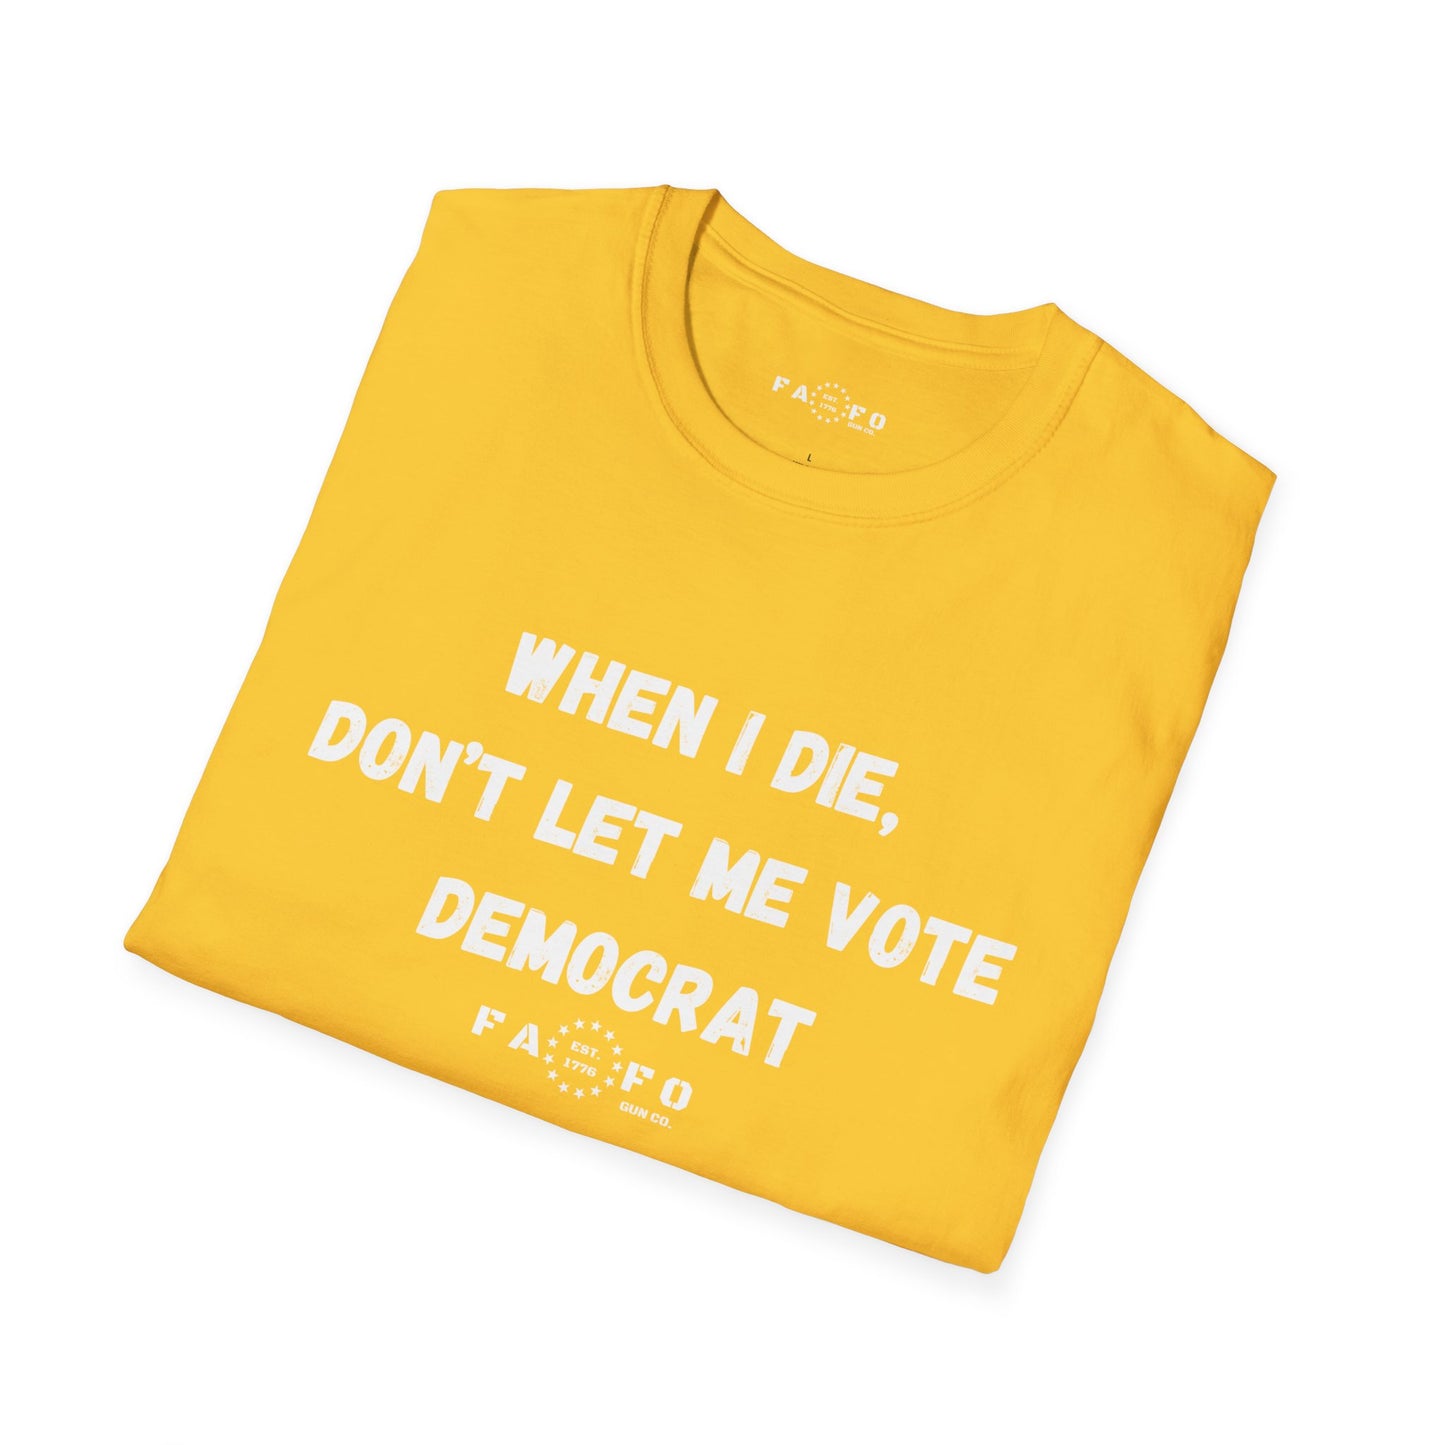 When I Die, Don't Let Me Vote Democrat T-Shirt